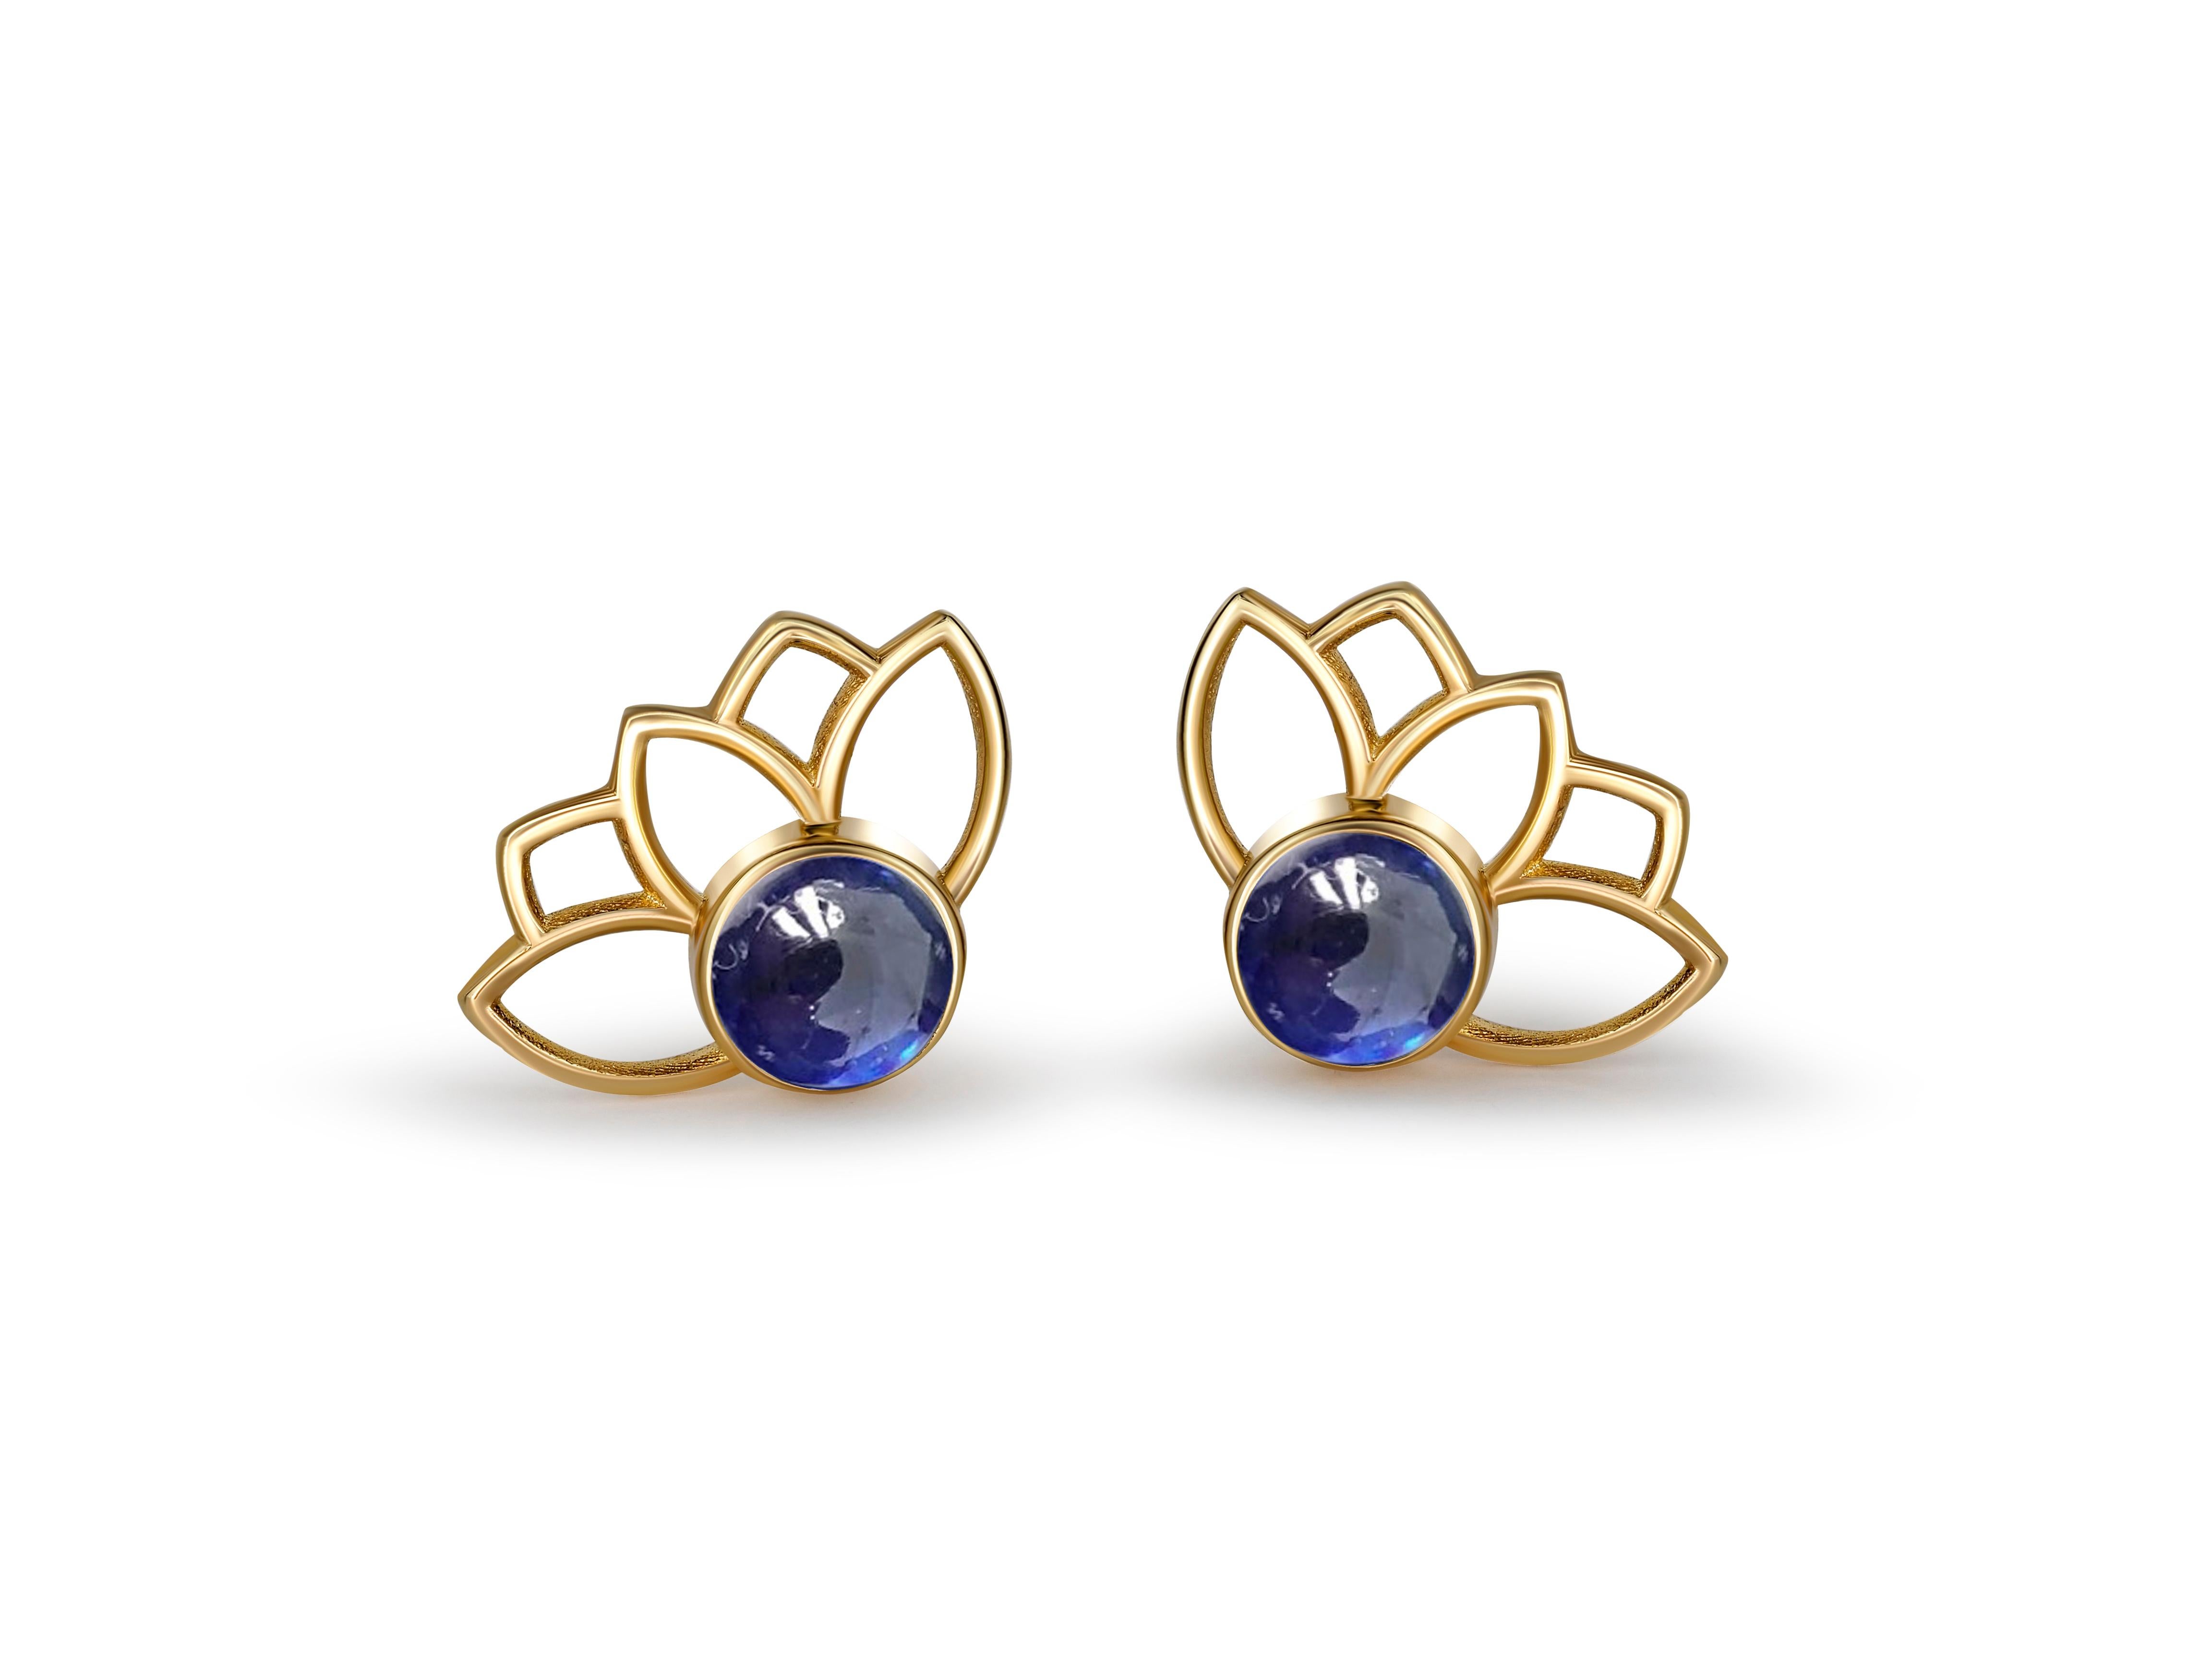 Lotus earrings studs with sapphires in 14k gold.  Sapphire cabochon earrings.  Blue sapphire Gold Earrings. Flower gold earrings. Round sapphire earrings studs. Everyday earrings with sapphires. Flower gold earrings.

Metal: 14 karat gold
Weight: